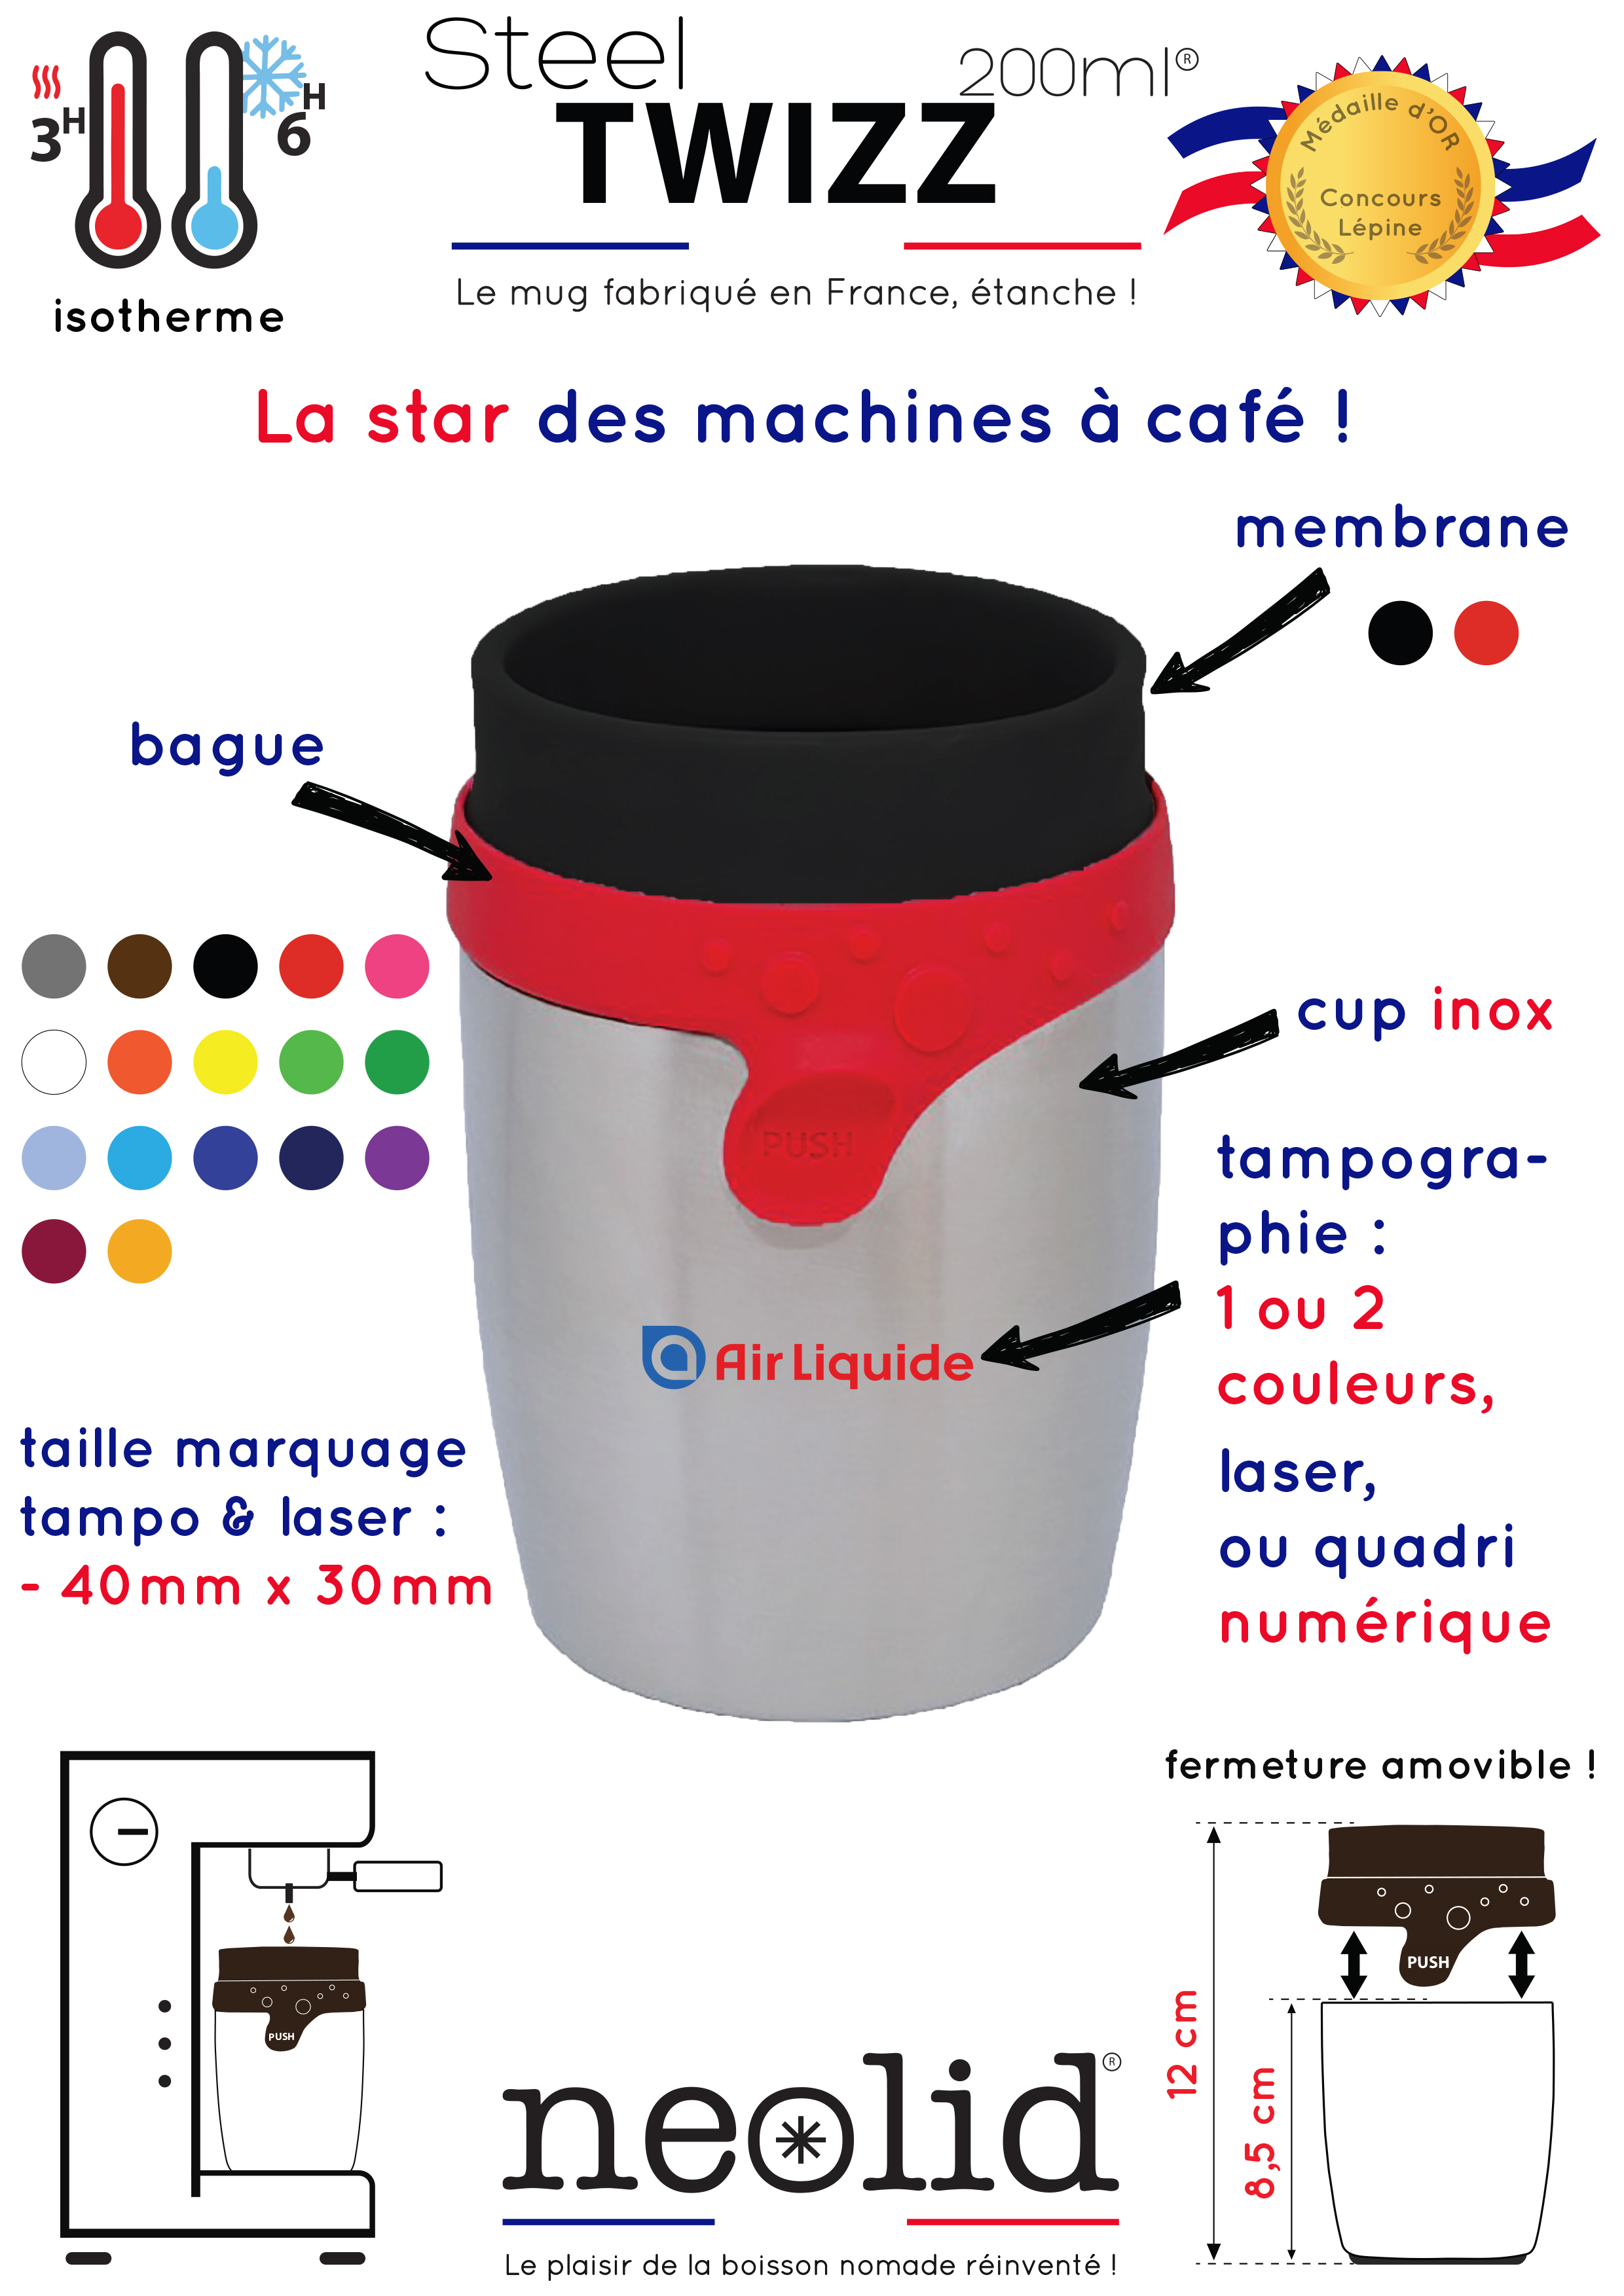 Le petit mug thermos en inox Steel TWIZZ 200ml MADE IN FRANCE !